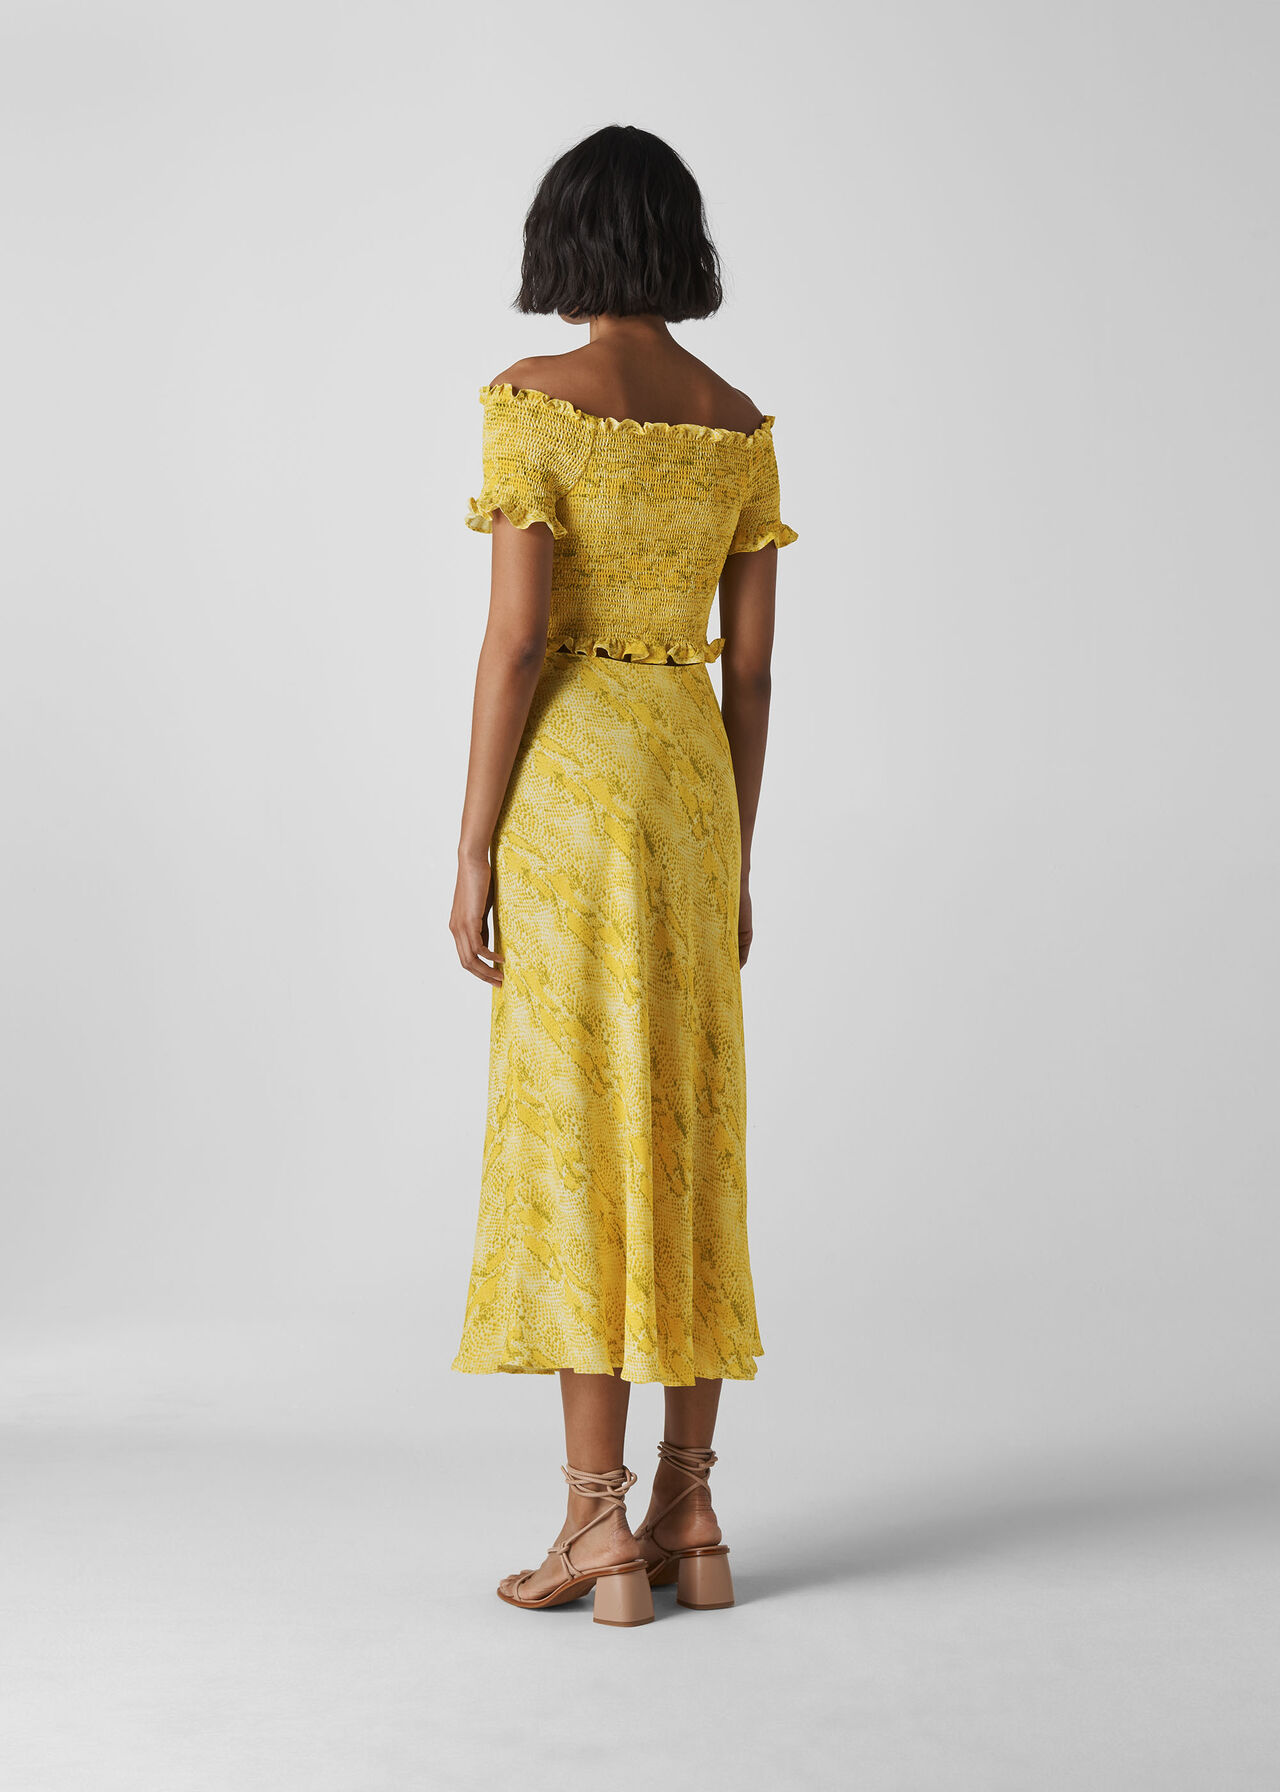 Python Print Bias Cut Skirt Yellow/Multi